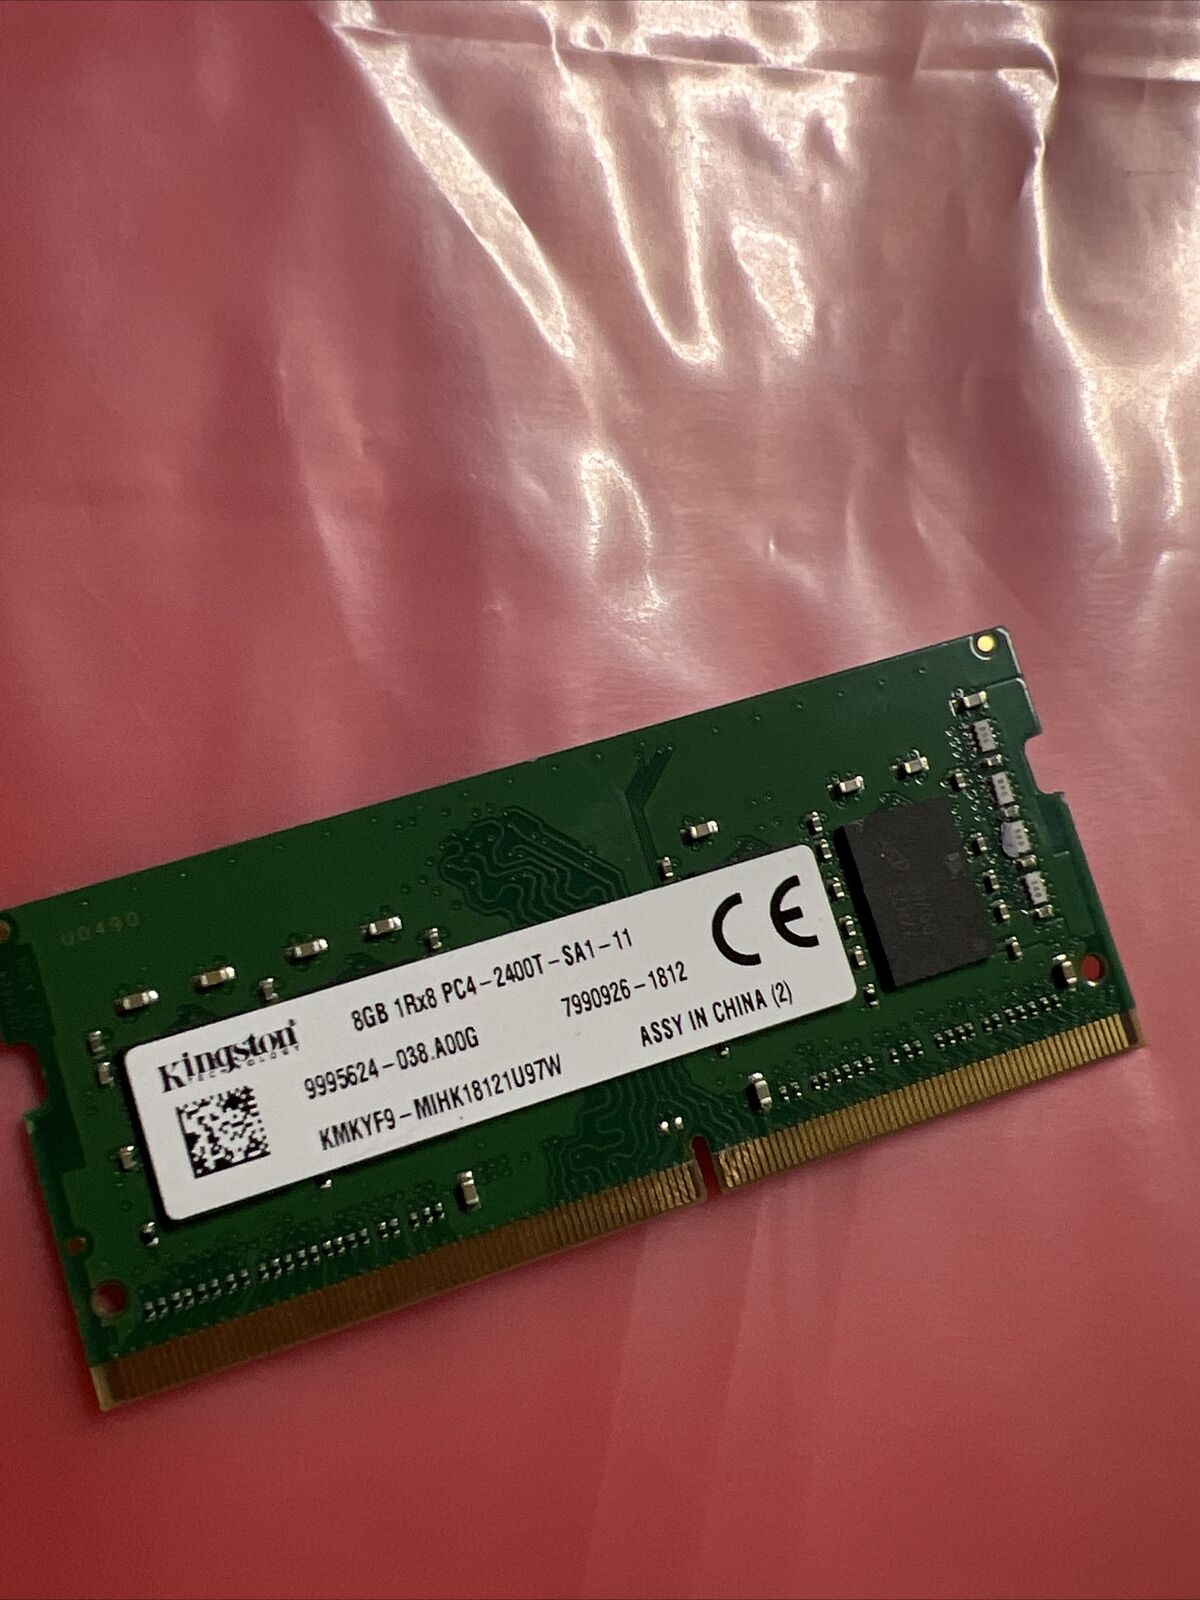 KINGSTON 8GB (1X8GB) 1RX8 PC4-2400T DDR4 SODIMM LAPTOP MEMORY KMKYF9-MIB